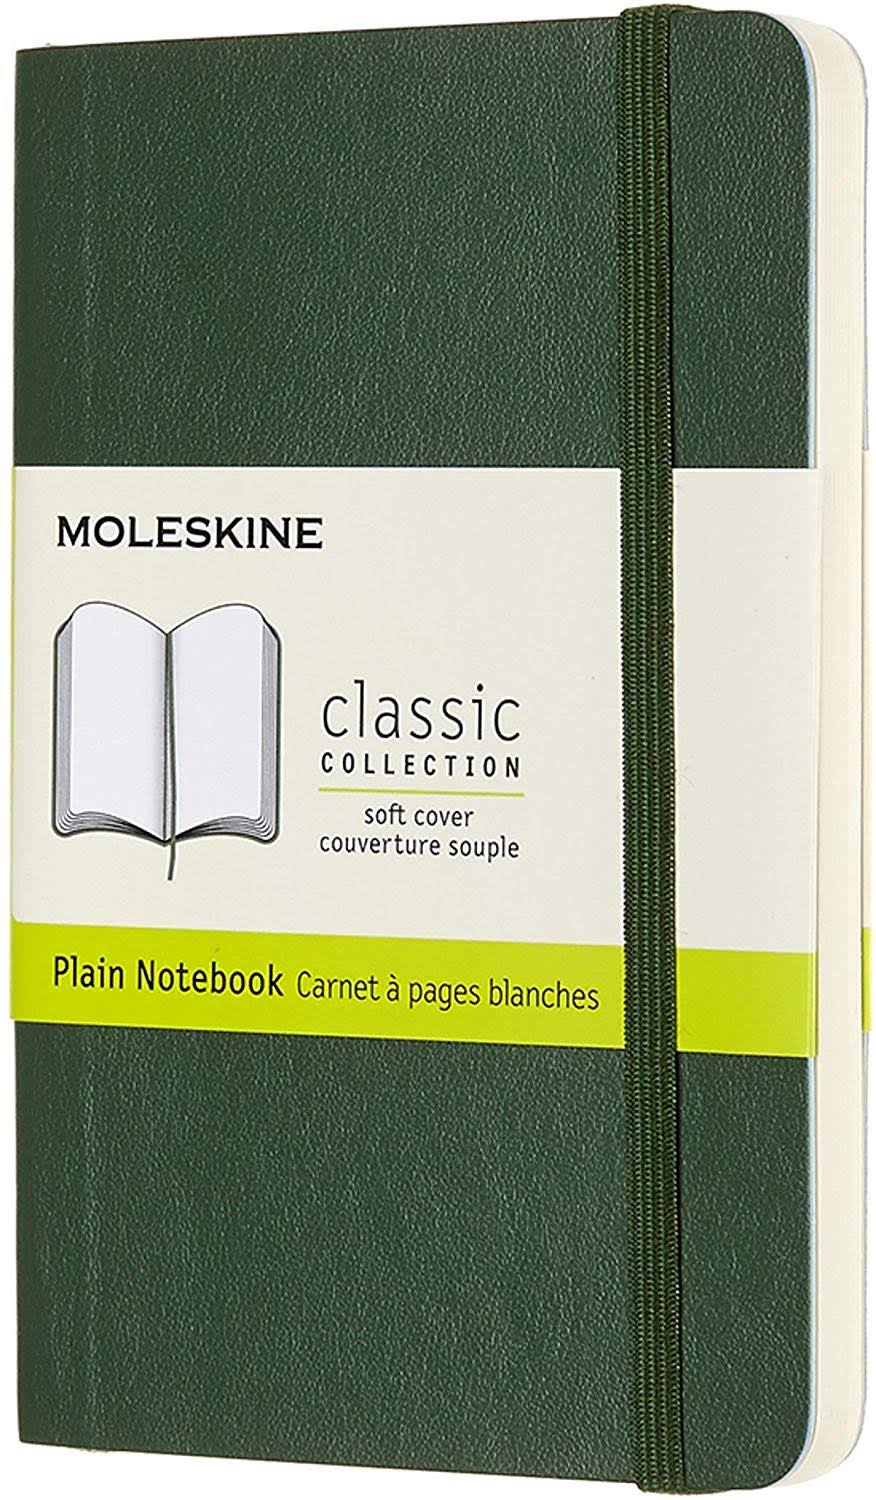 Moleskine Classic Notebook Pocket - Myrtle Green, Plain, Soft Cover